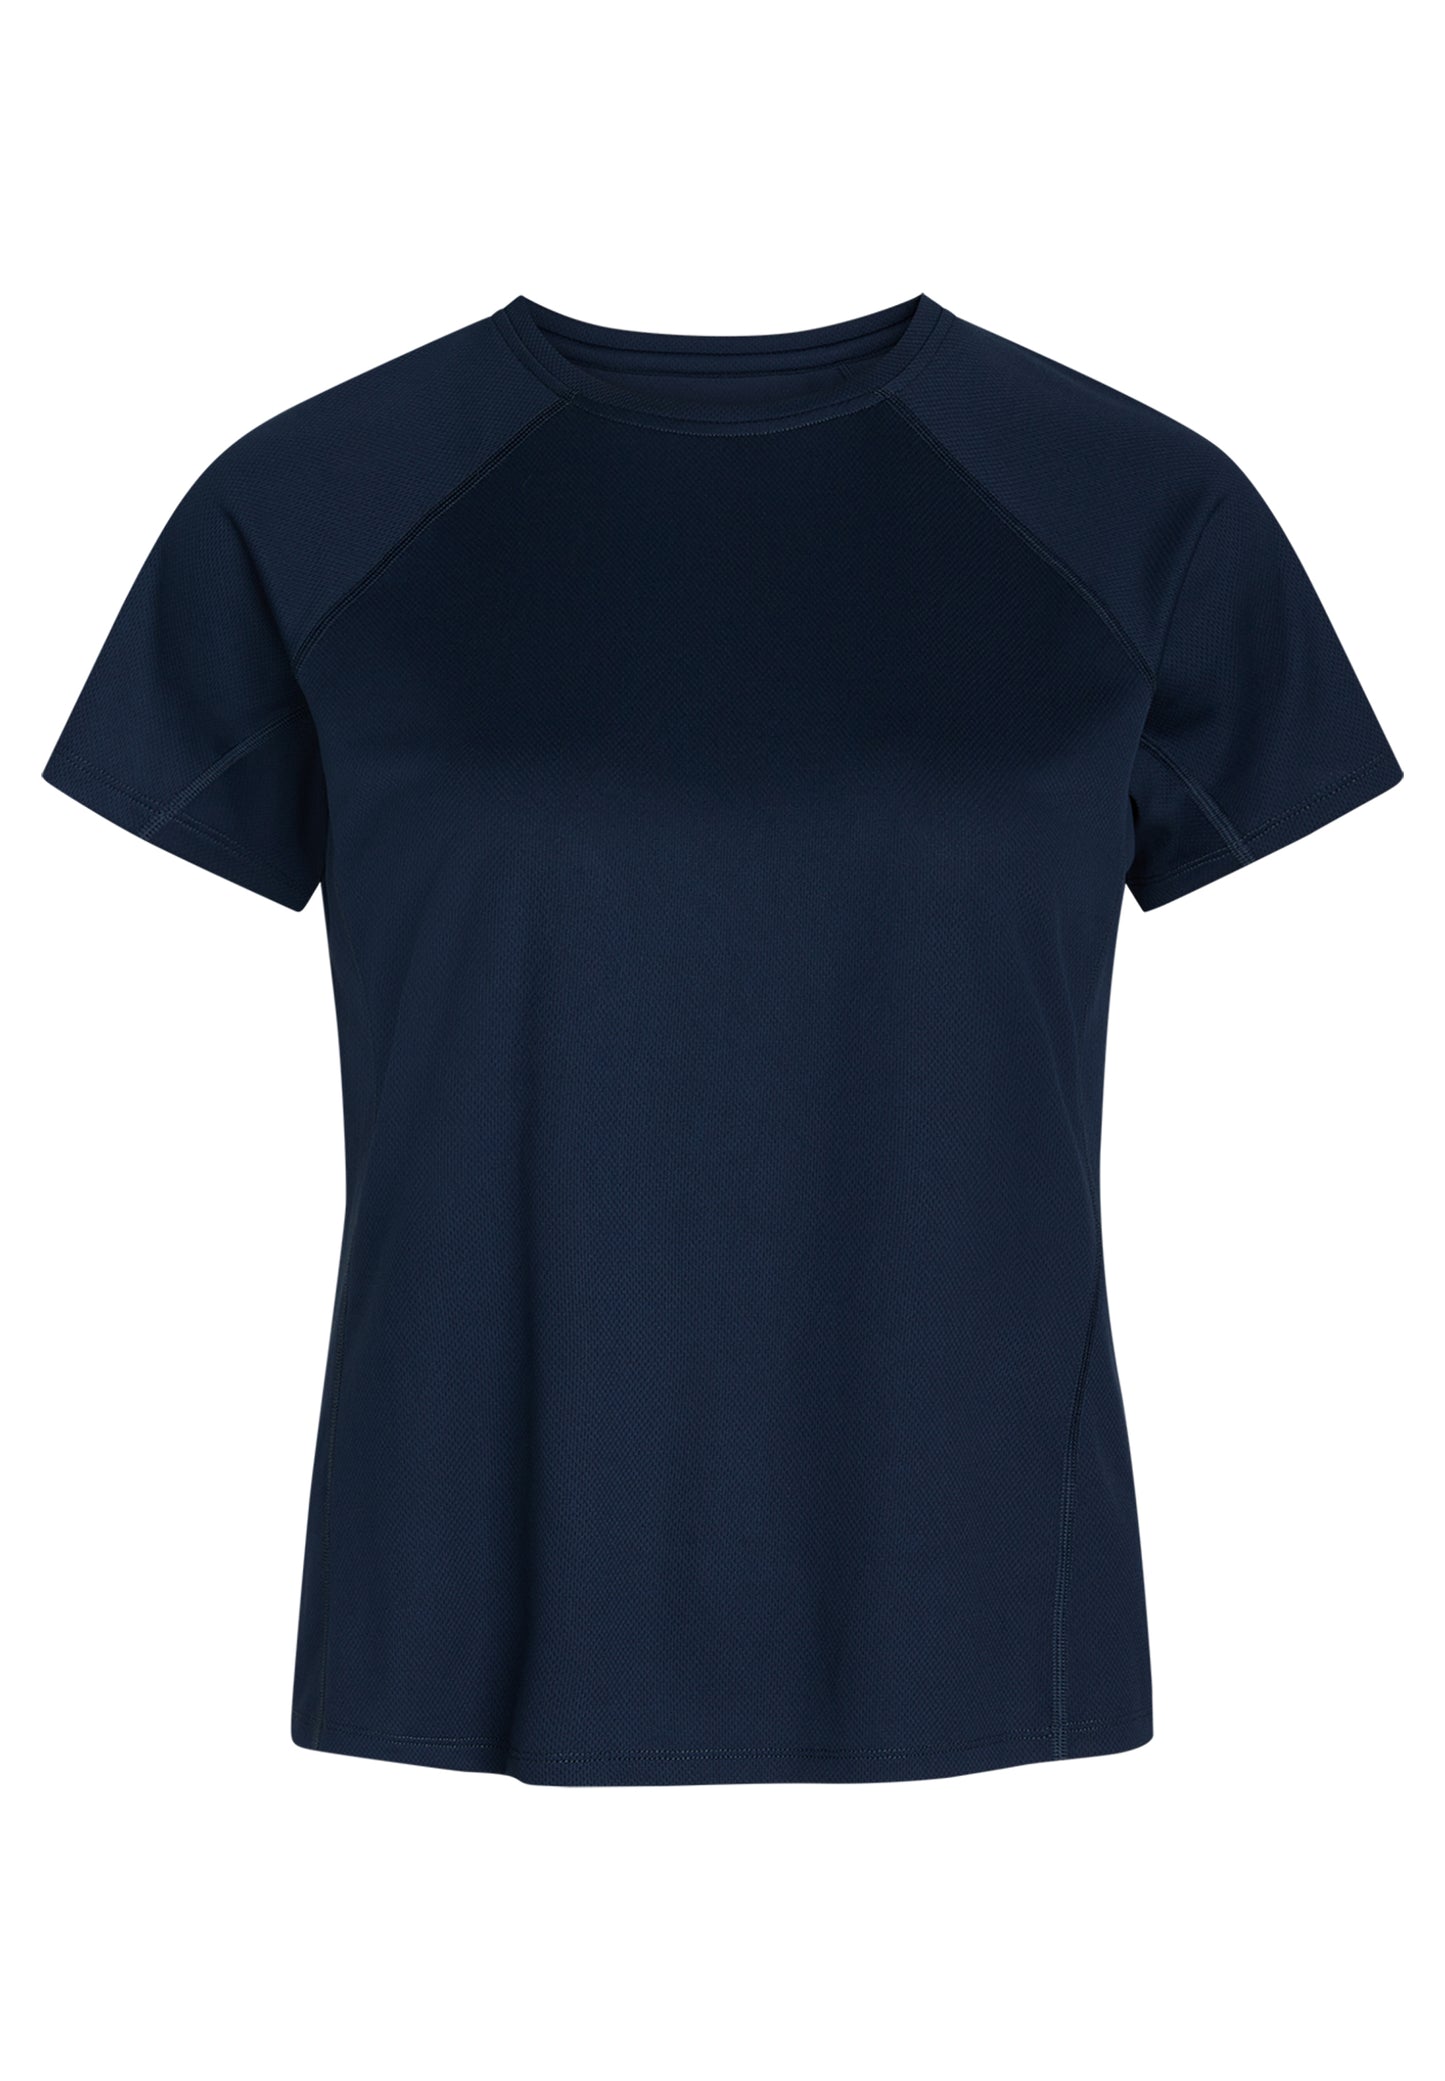 Zebdia Sports t-shirt kvinder navy